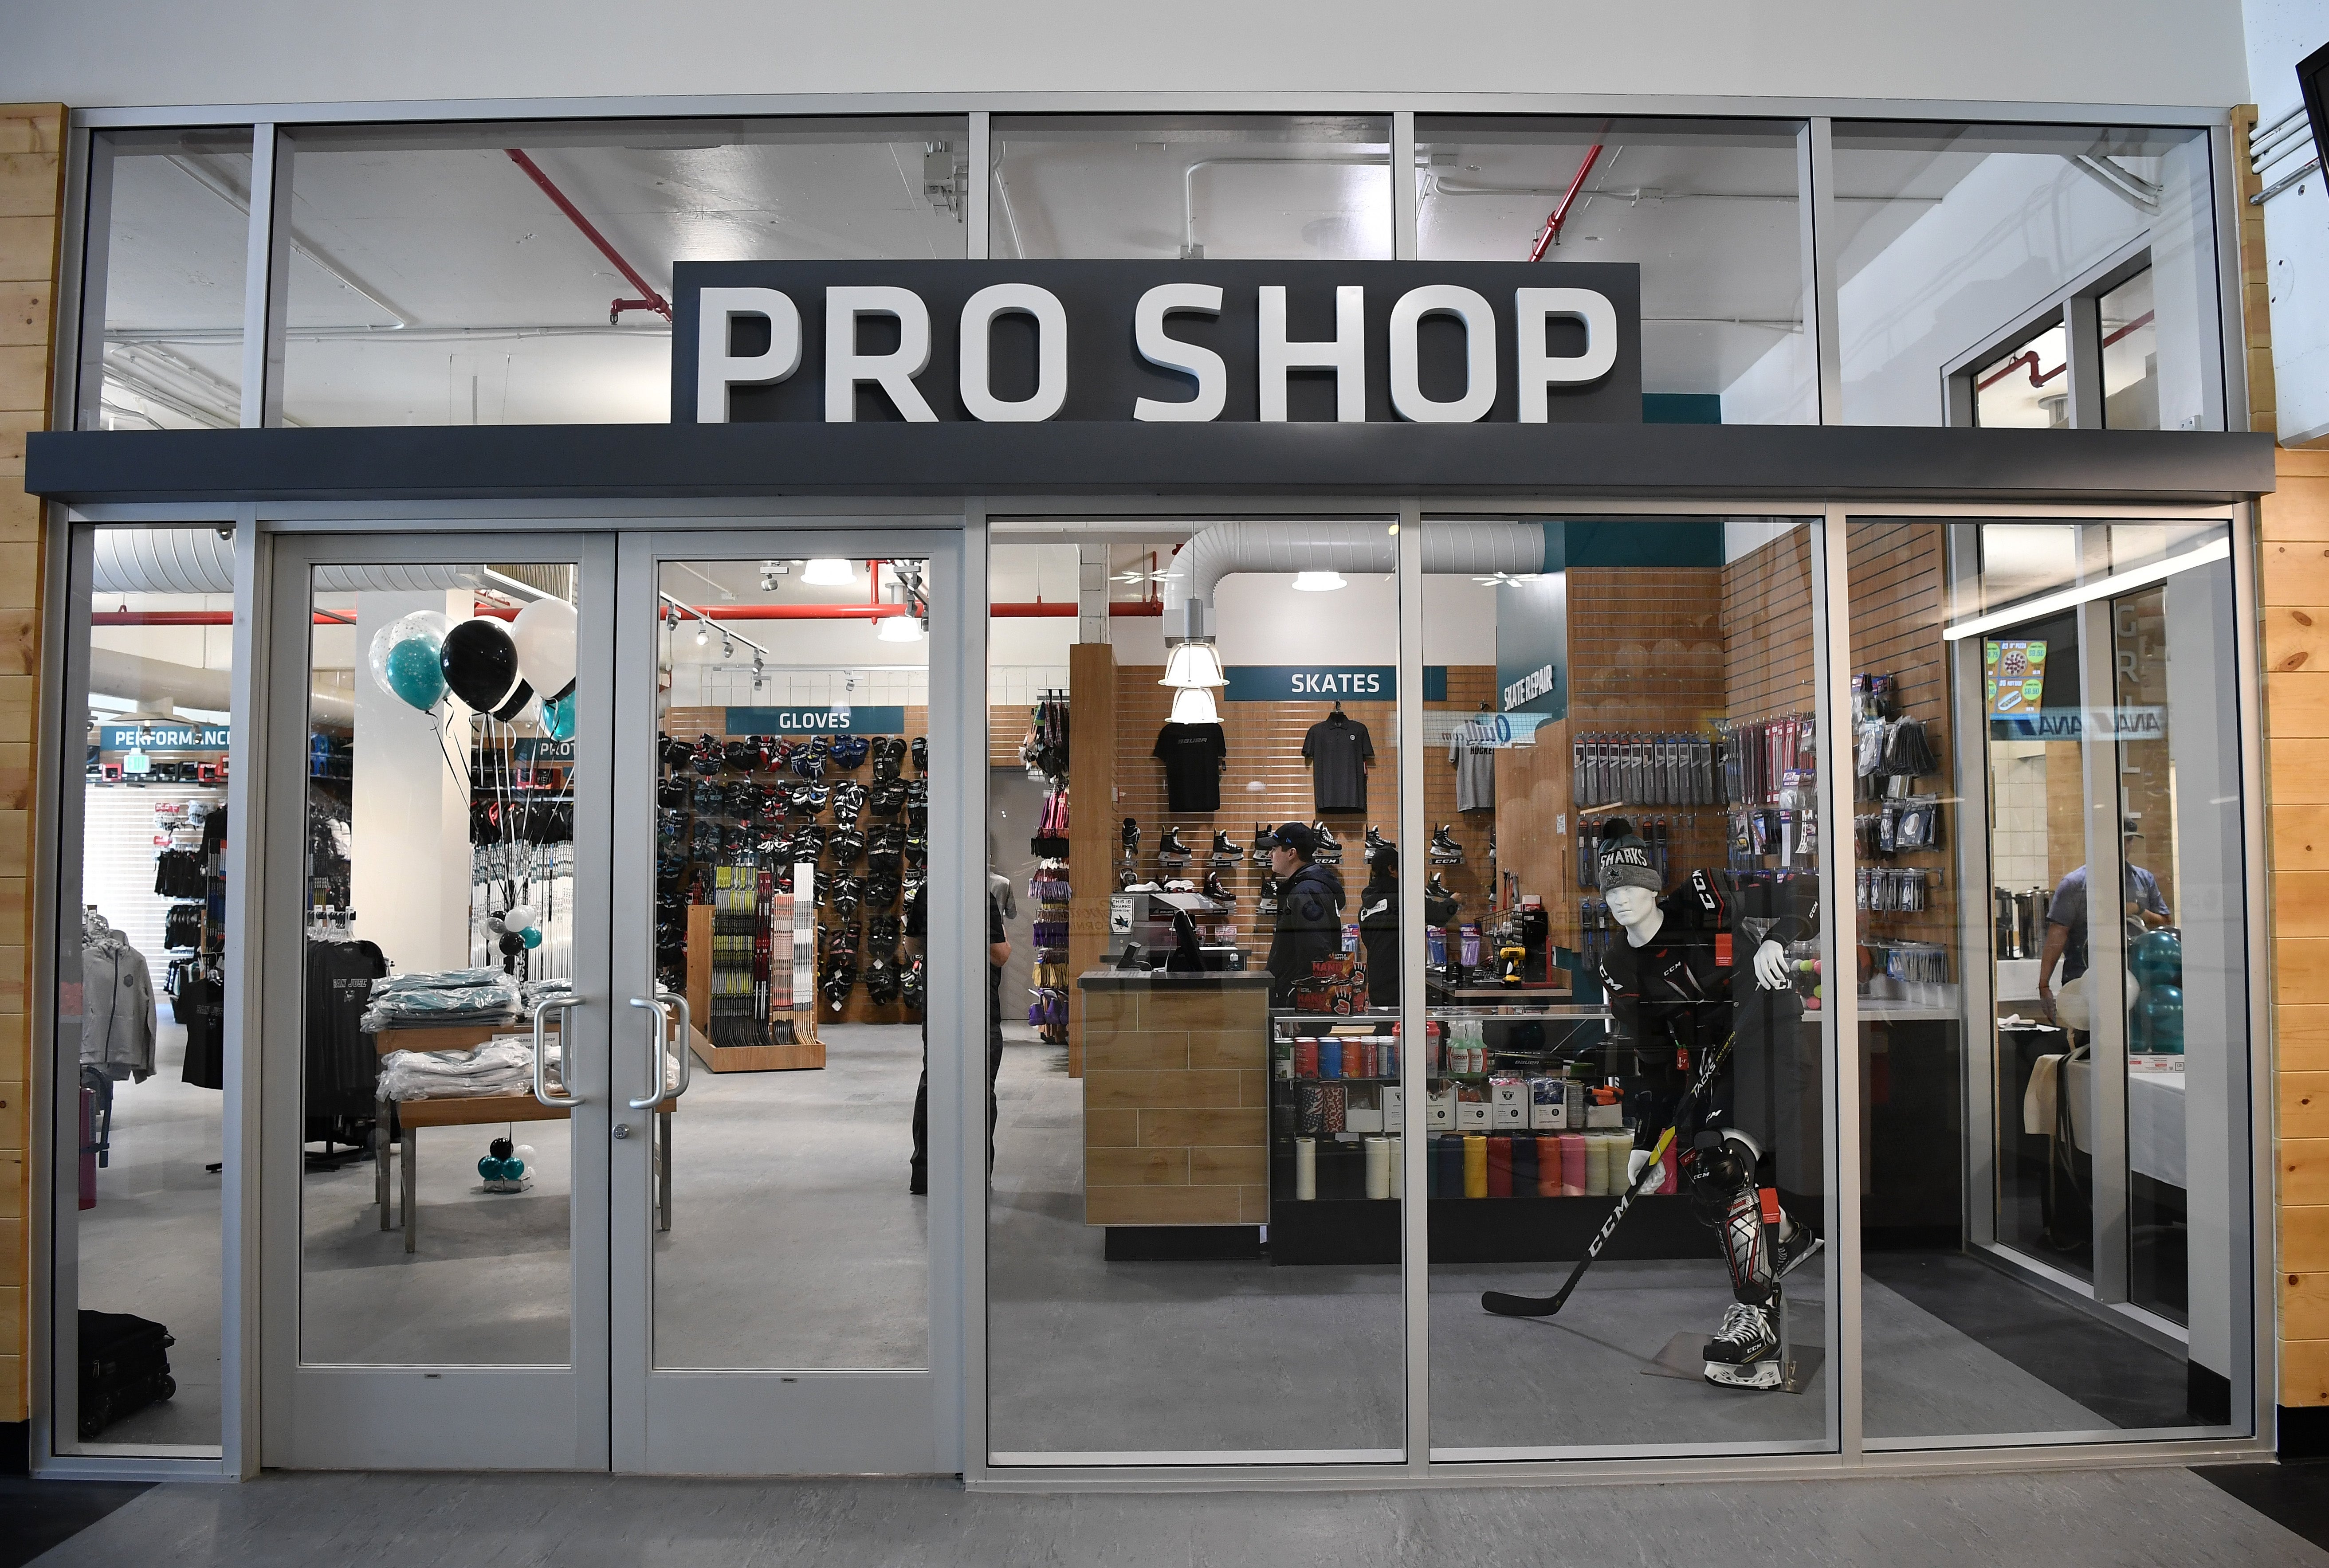 San Jose Sharks Gear, Jerseys, Store, Pro Shop, Hockey Apparel